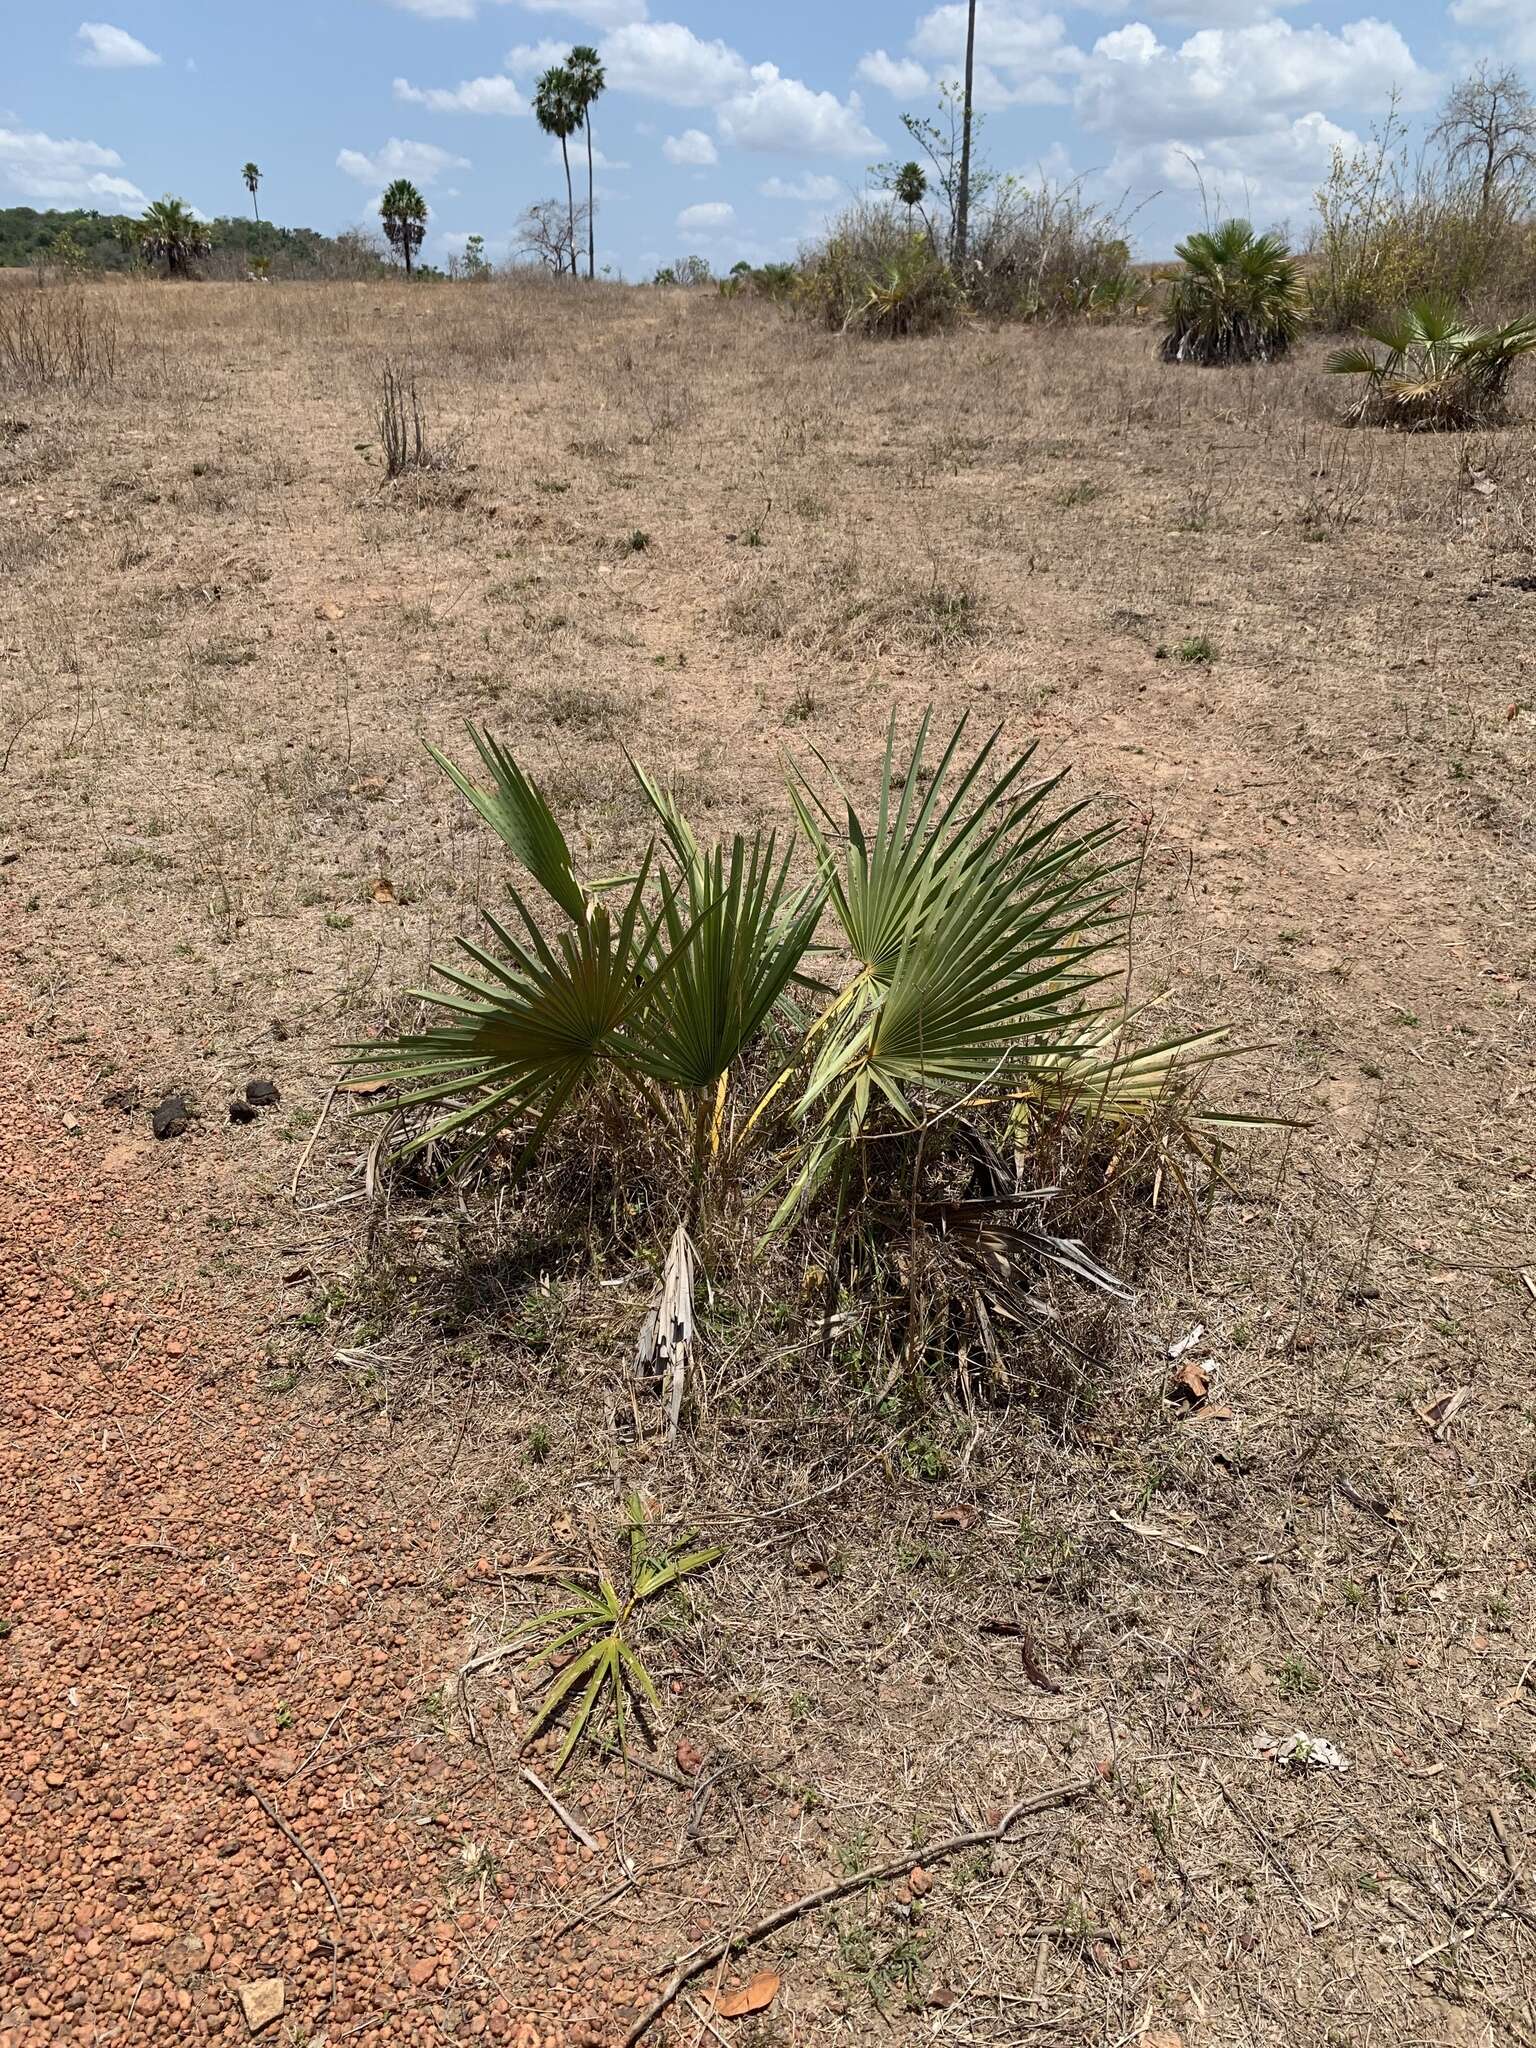 Image of Carnauba palm